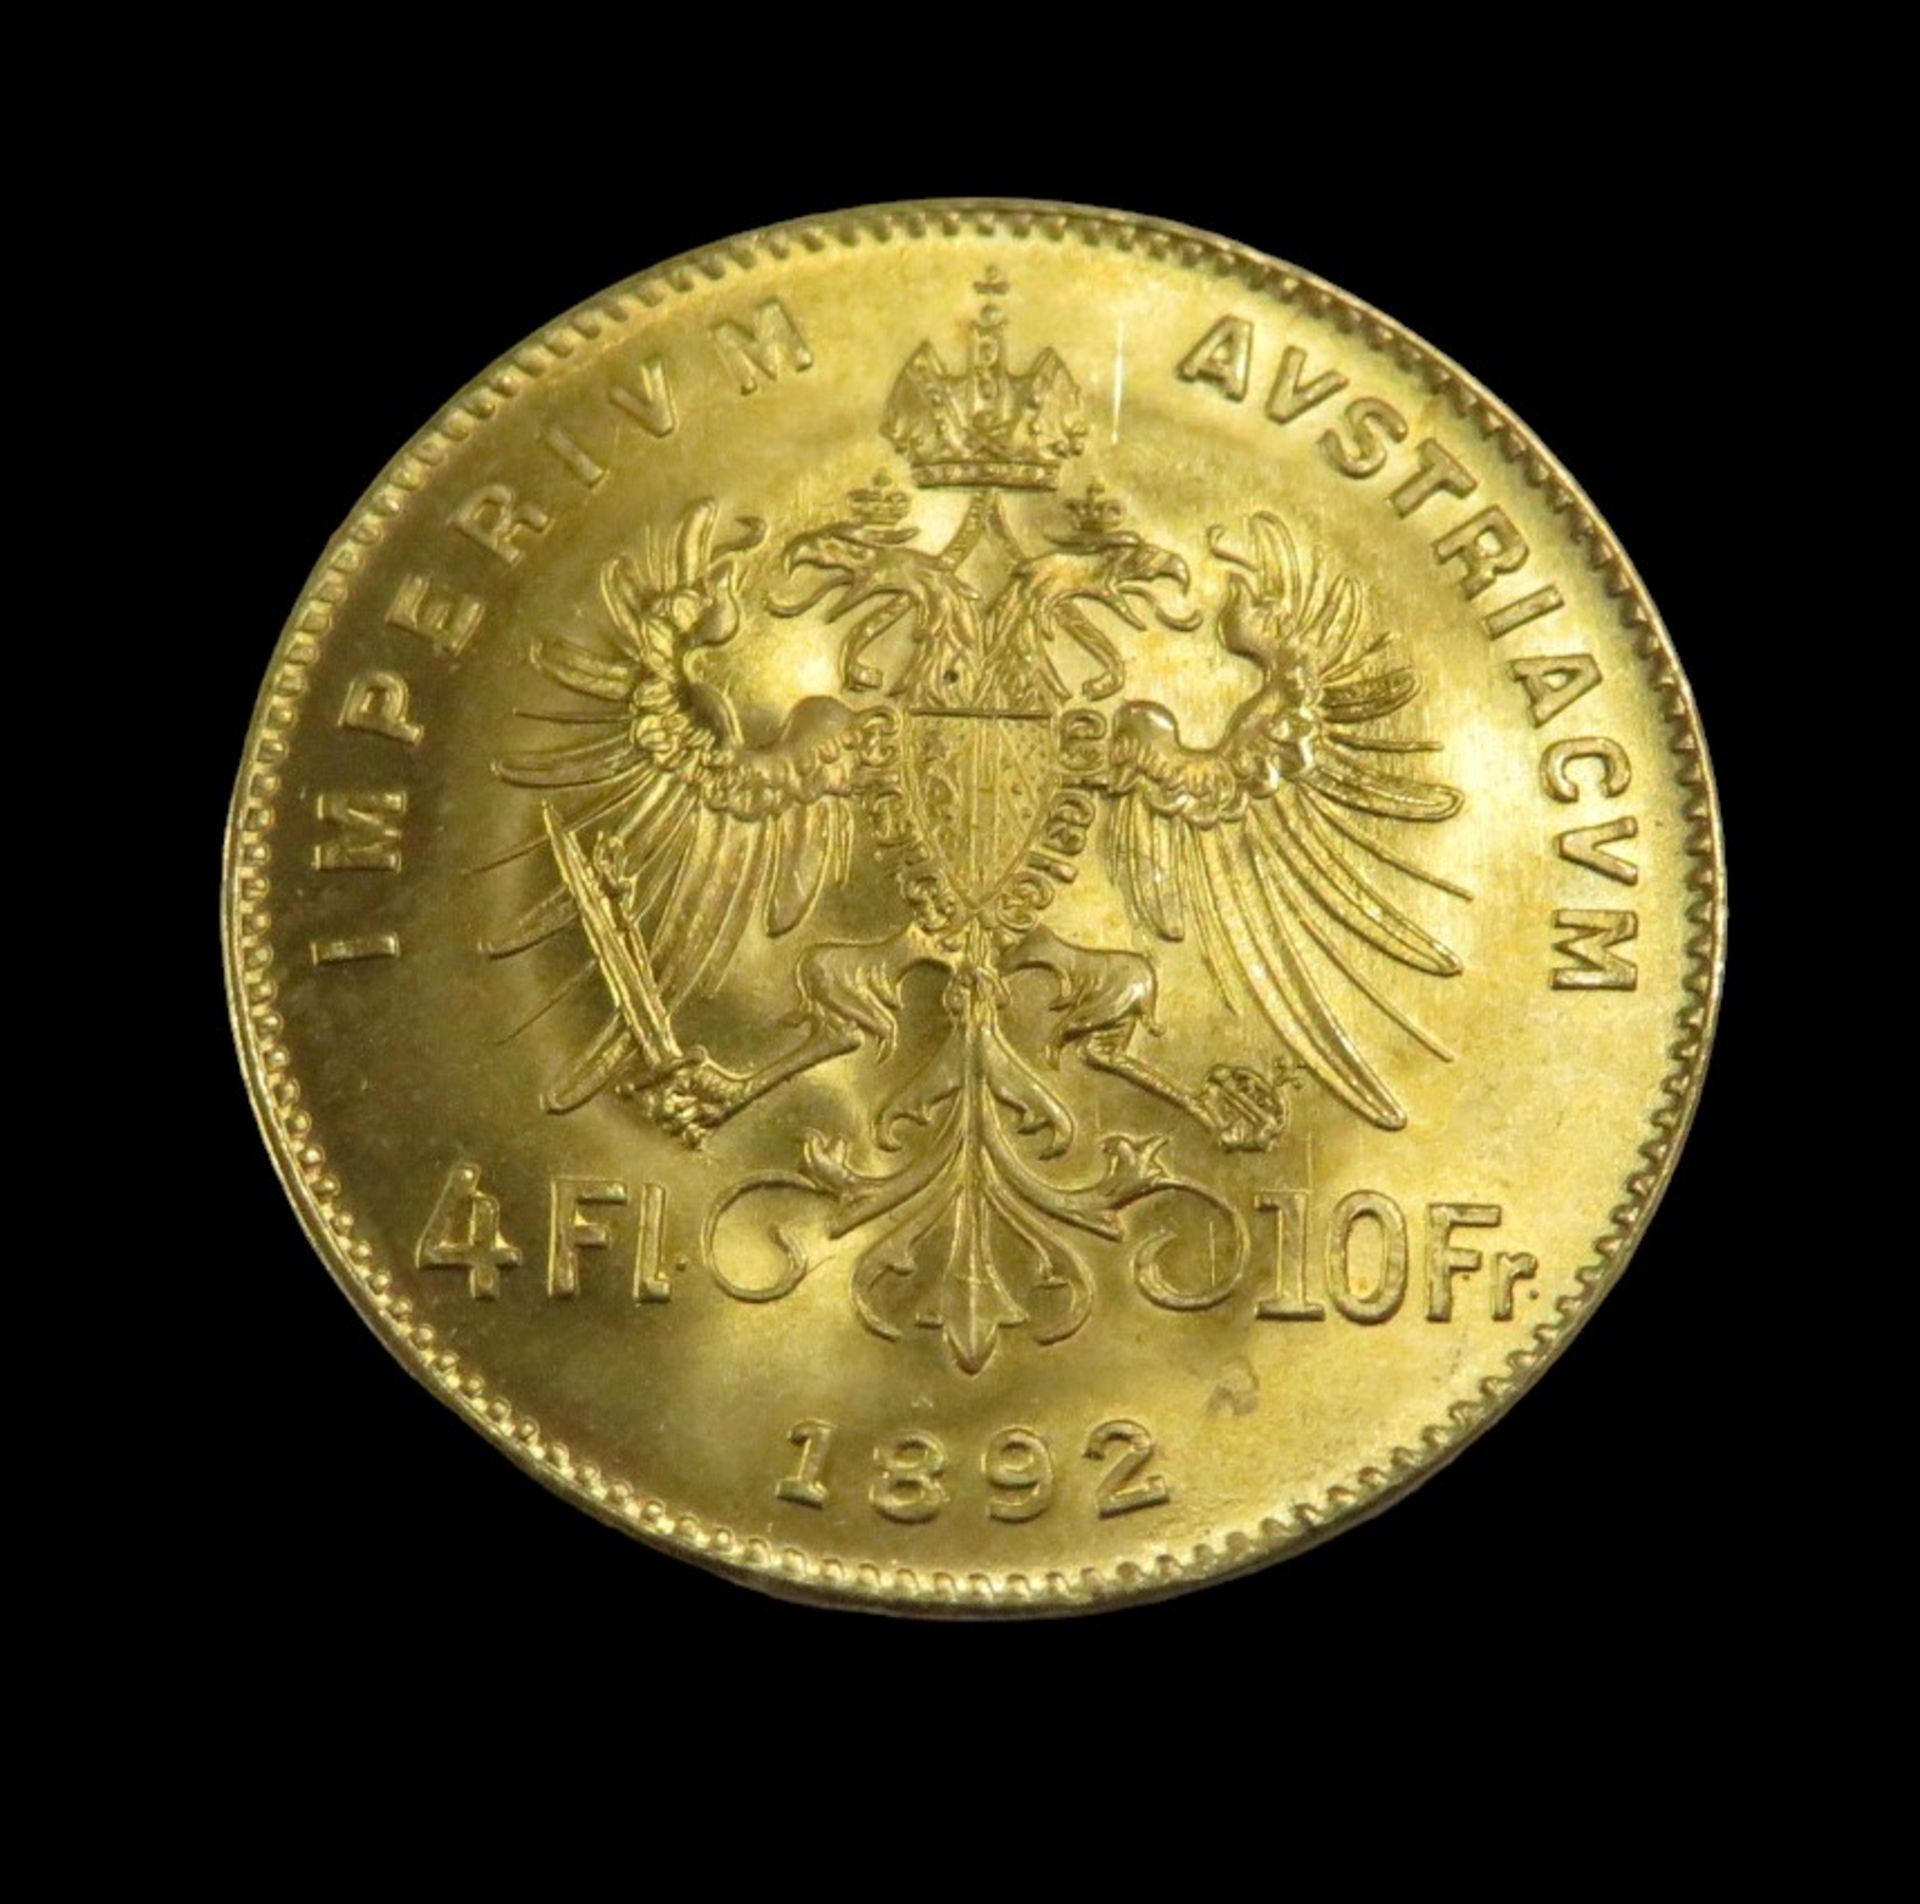 Goldmünze, Österreich, 4 Florin/Goldgulden, Franz Joseph I, 1892, Gold 900/000, 3,23 g, d 1,9 cm. - Image 2 of 2